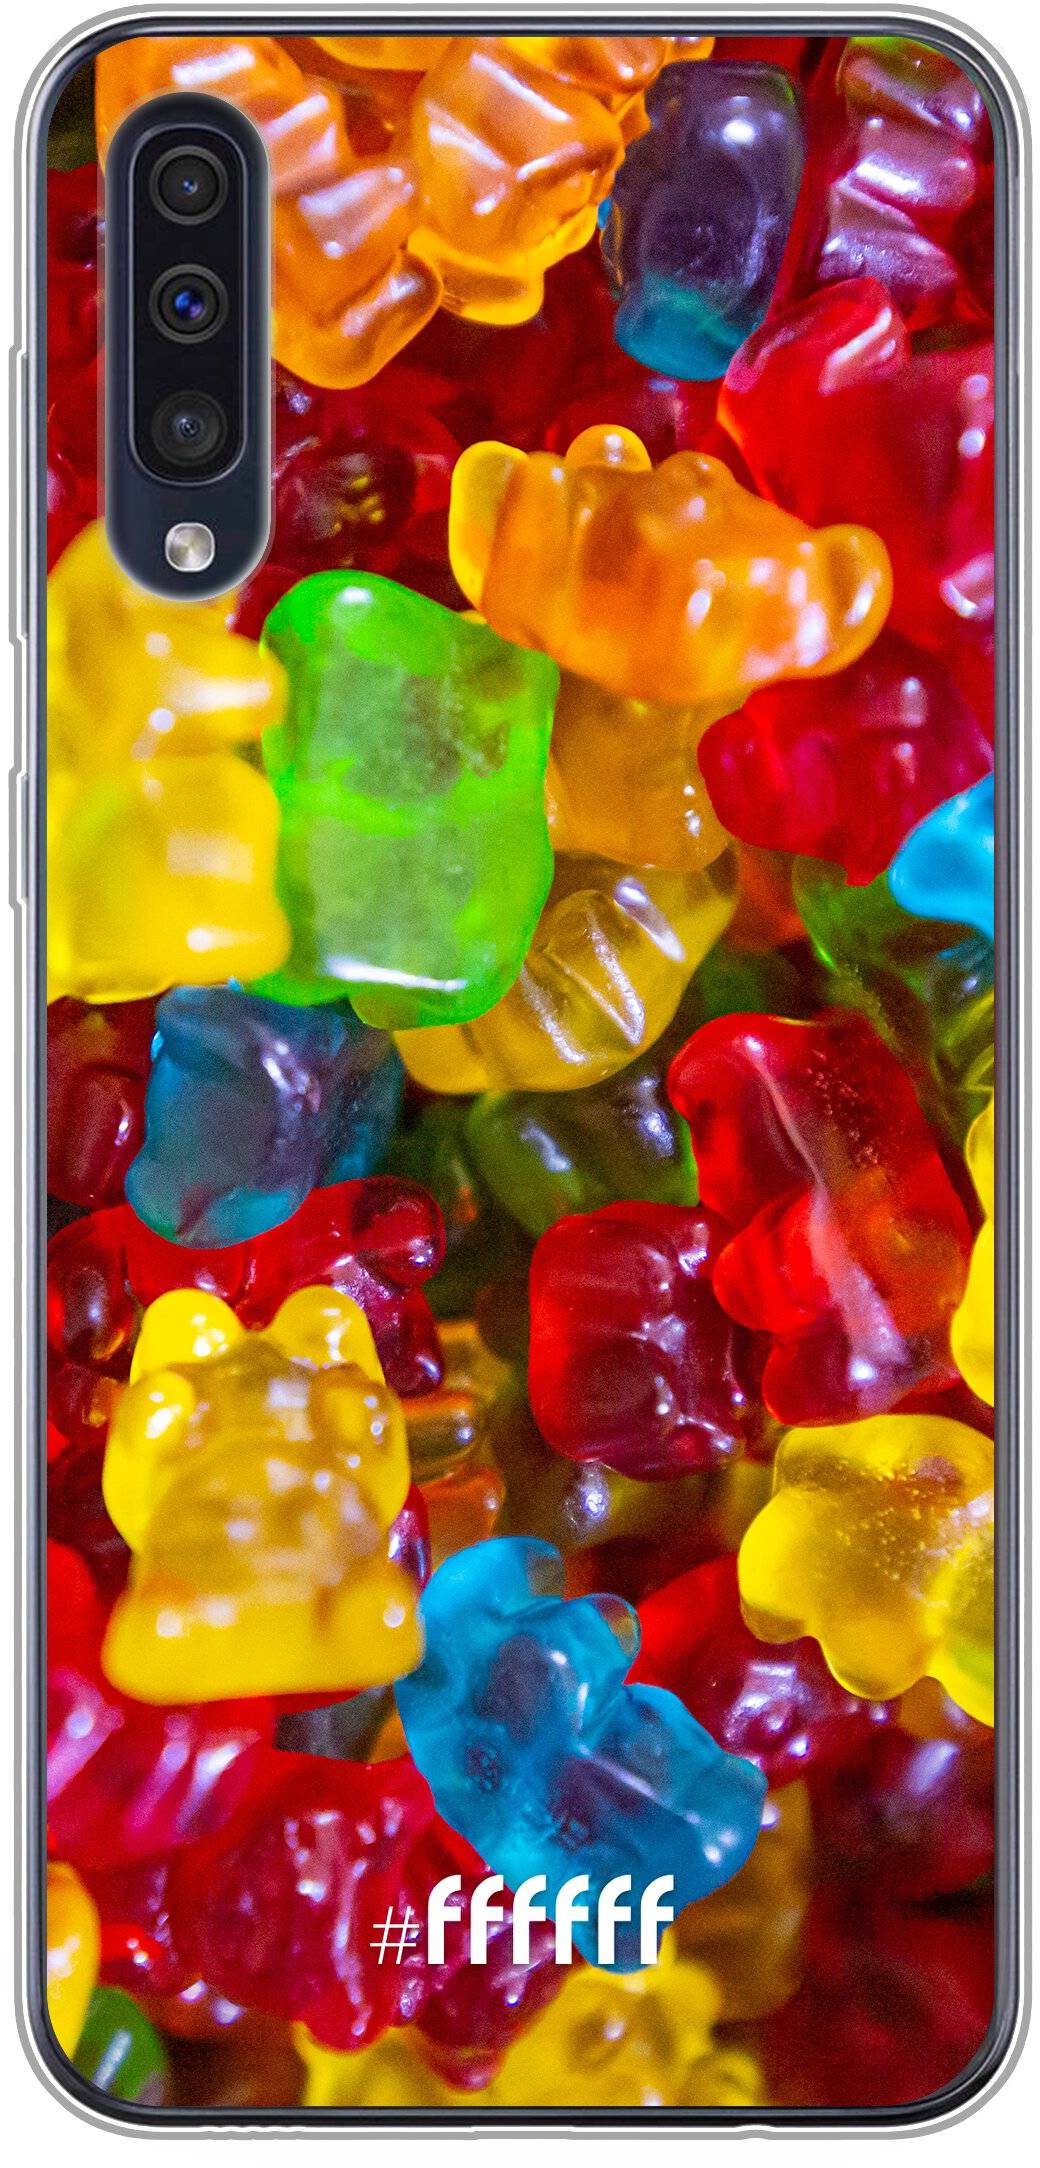 Gummy Bears Galaxy A50s